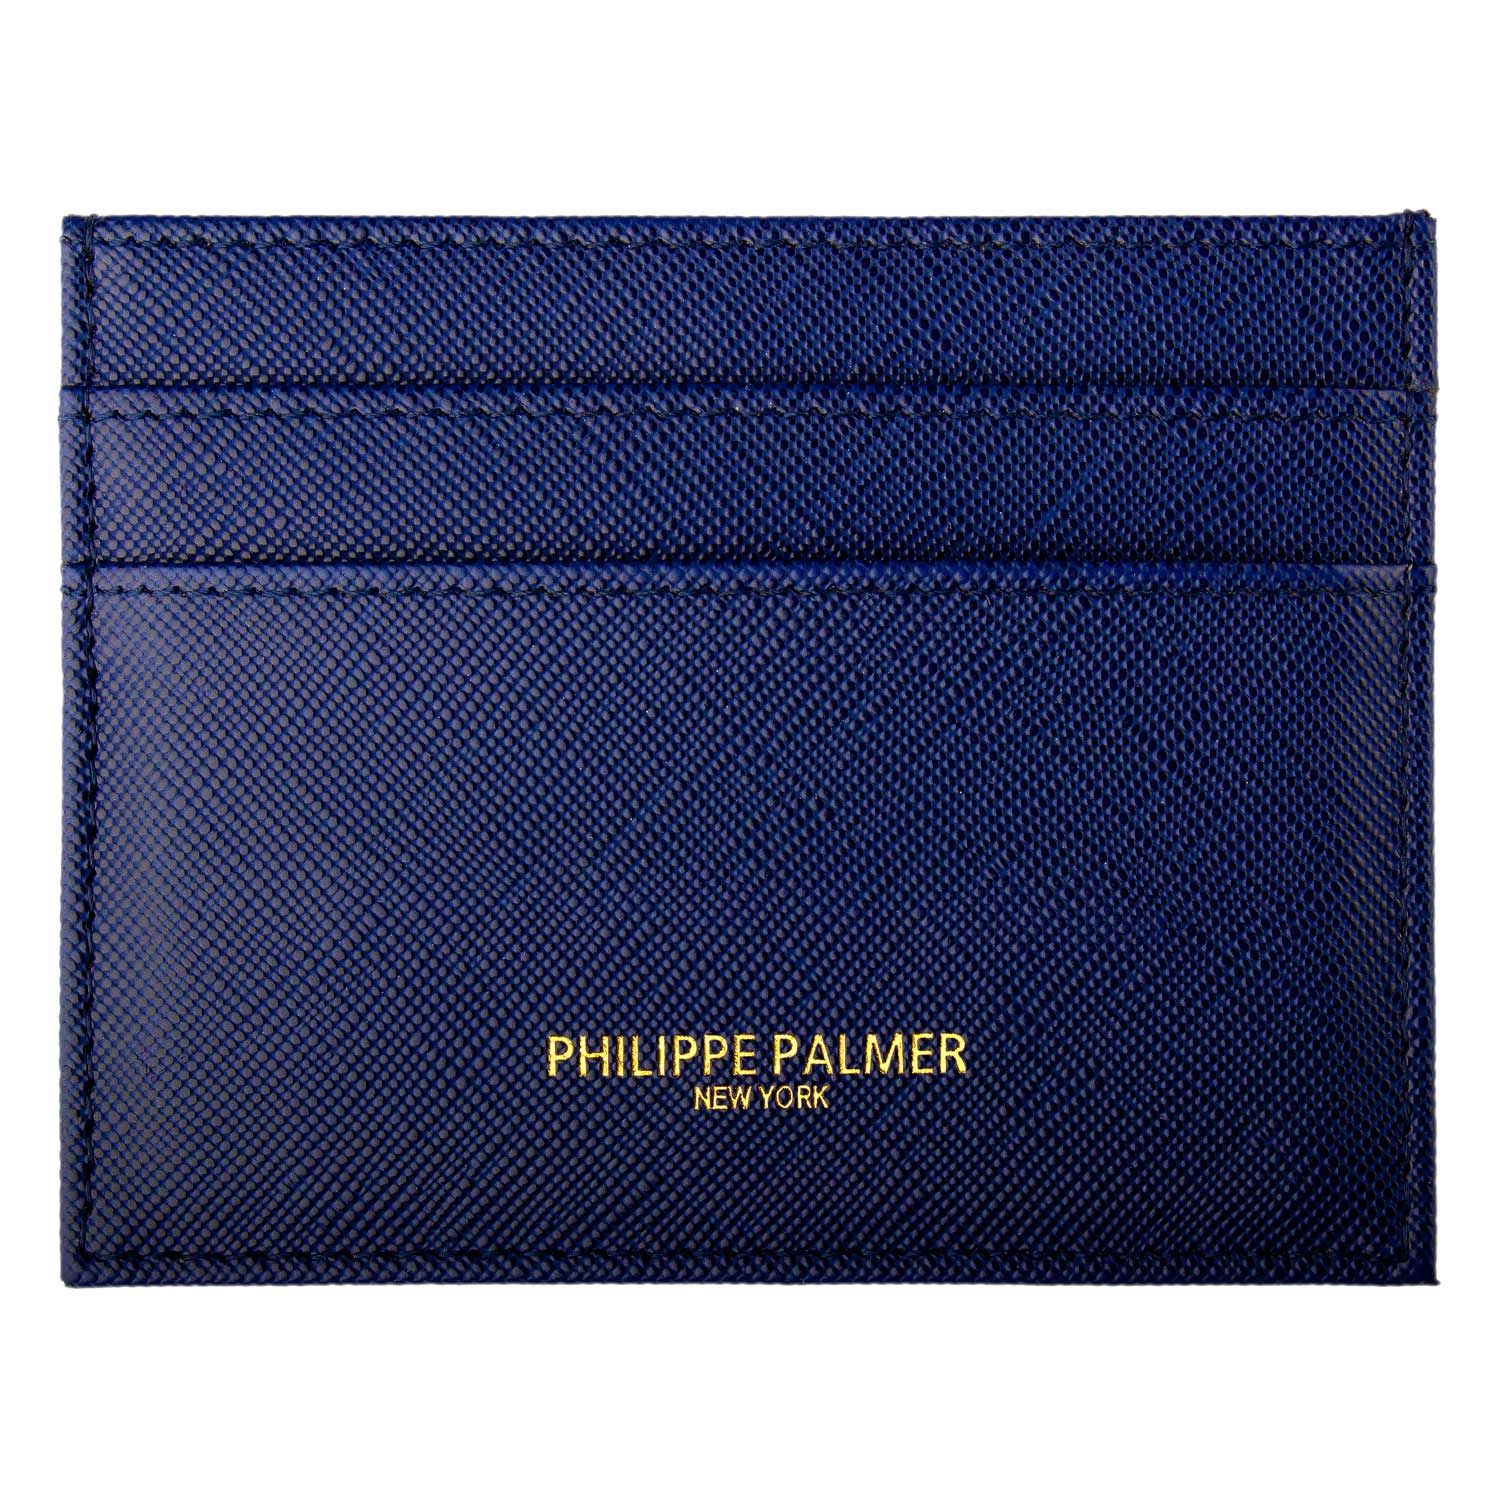 Philippe Palmer Card Holder Blue